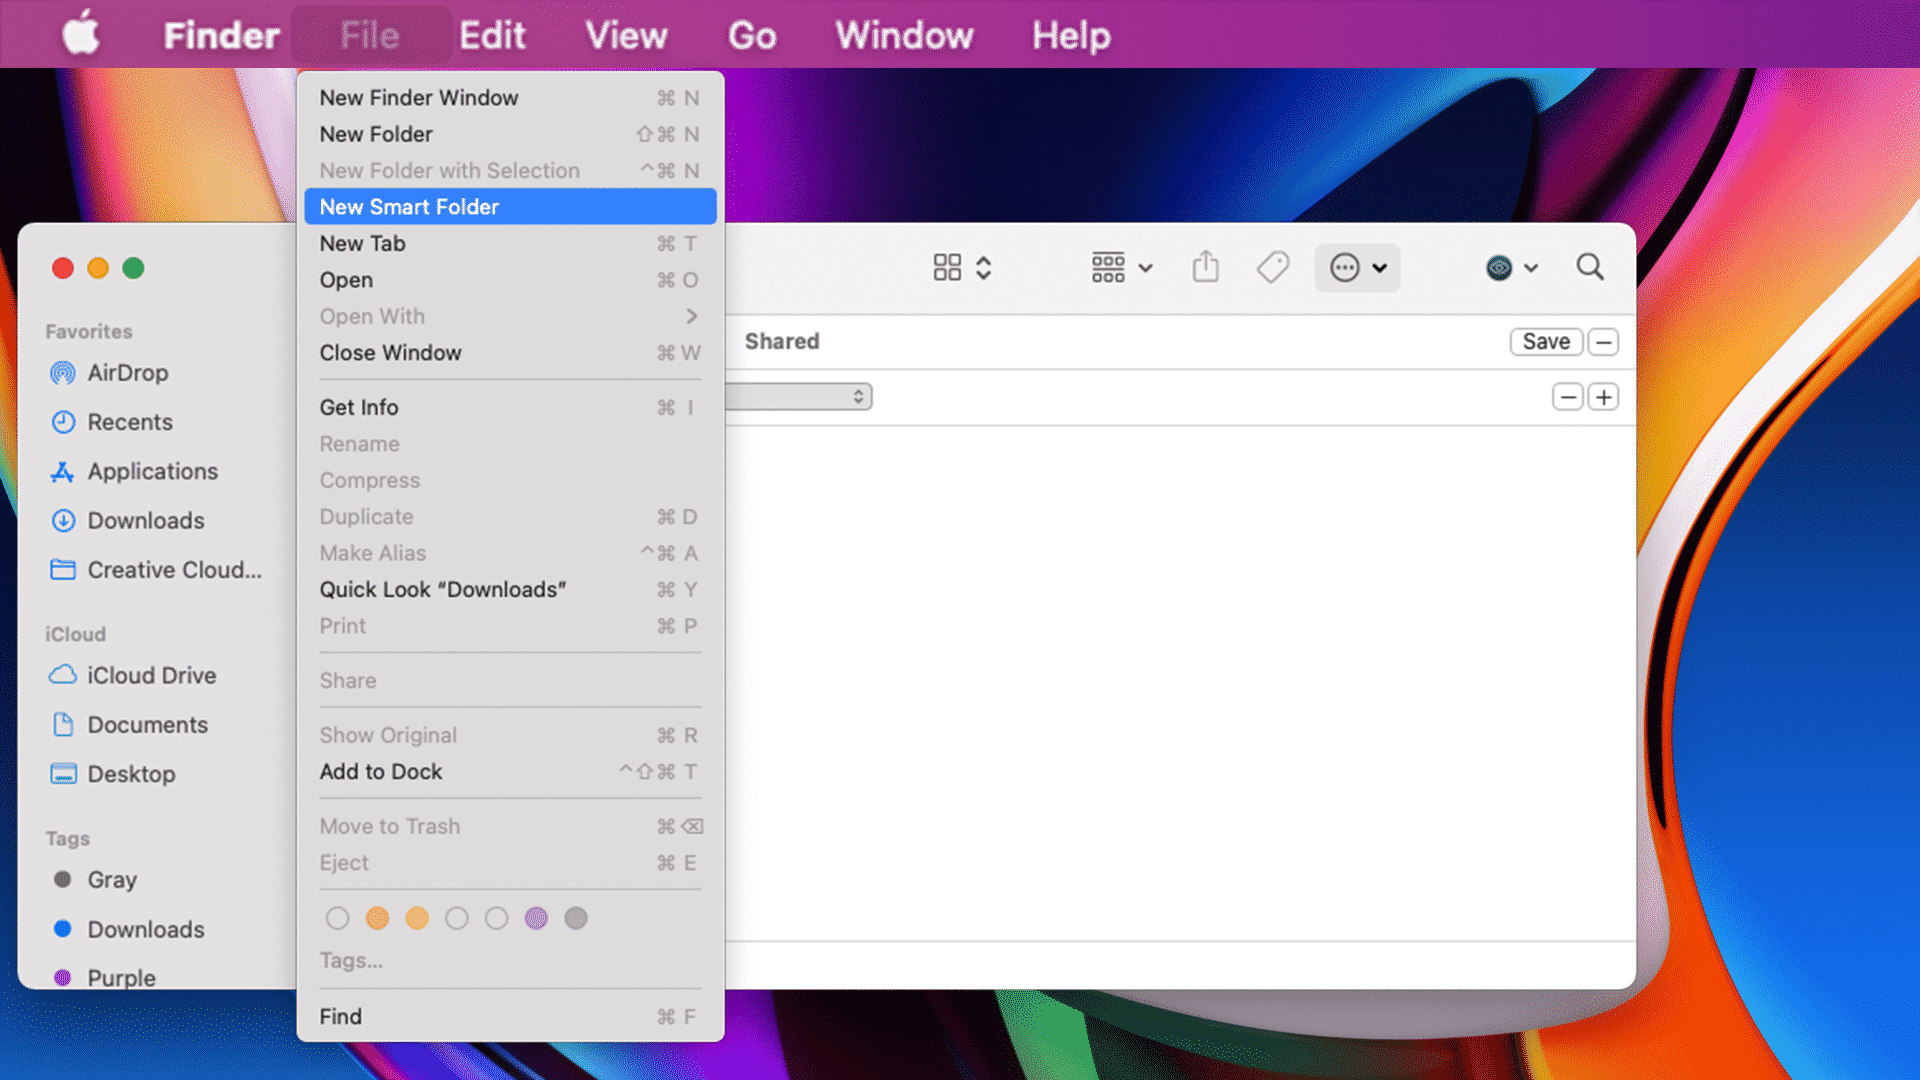 Choosing New Smart Folder command in Finder menu